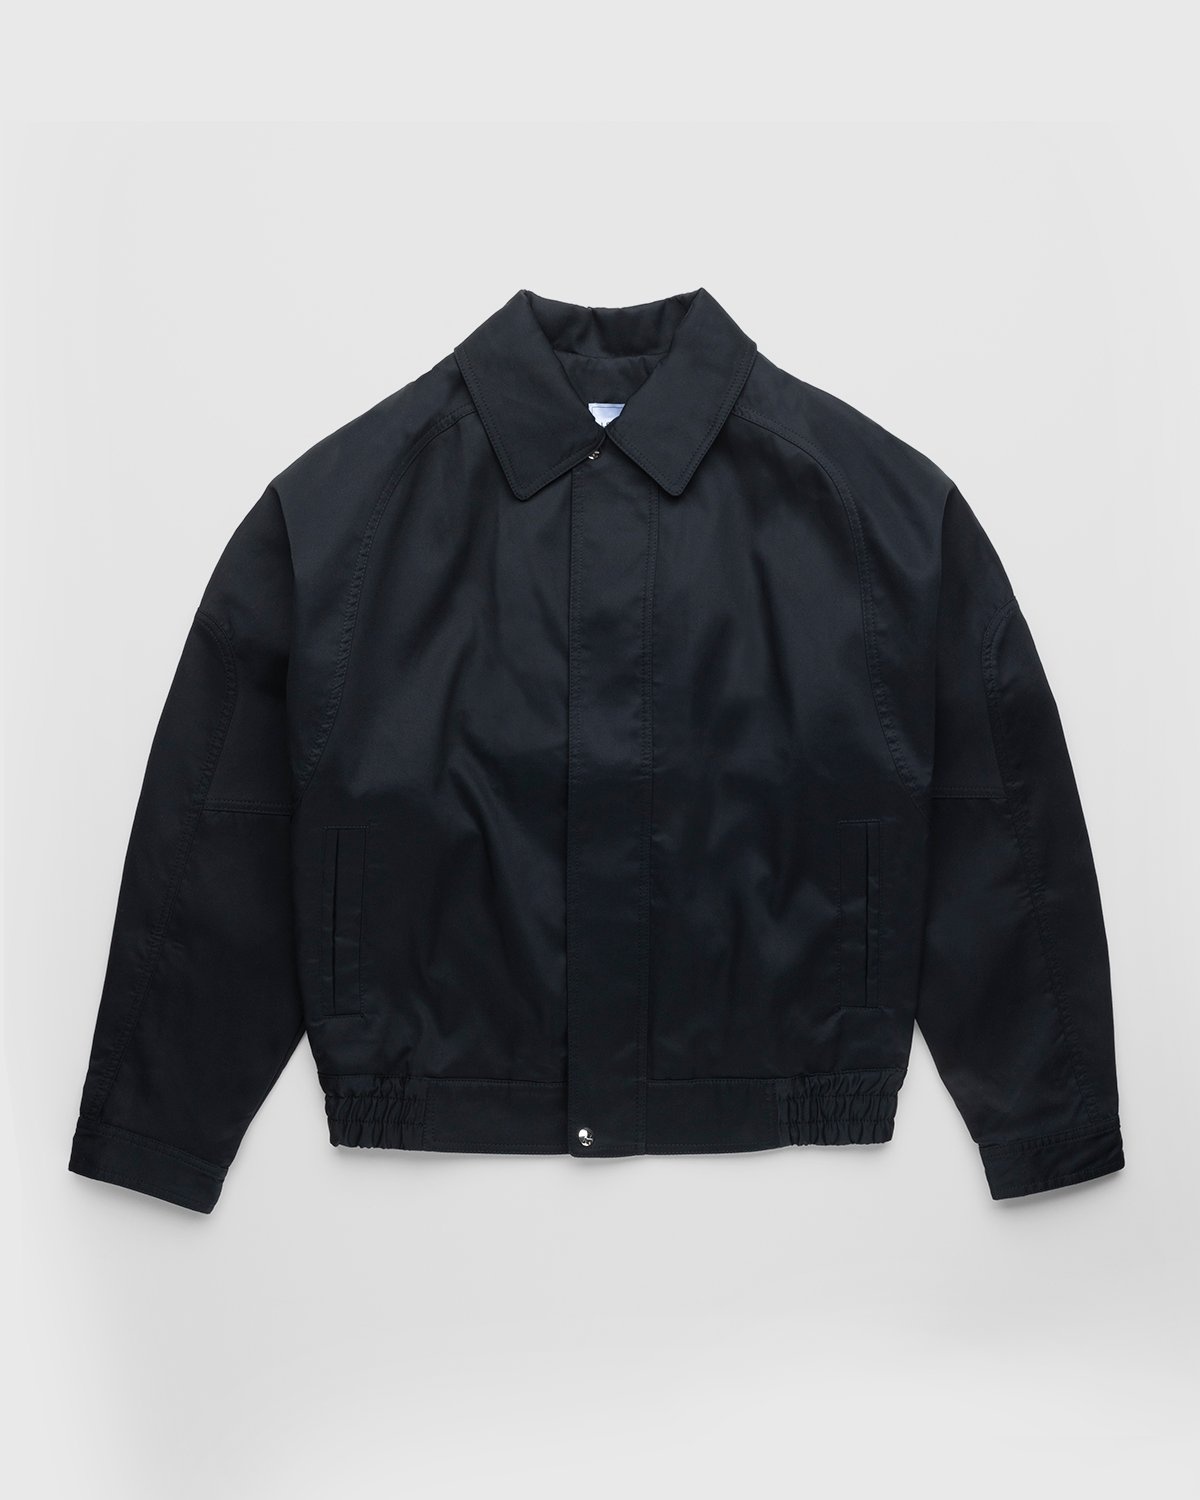 Lourdes New York – Backless Jacket Black - Outerwear - Black - Image 1